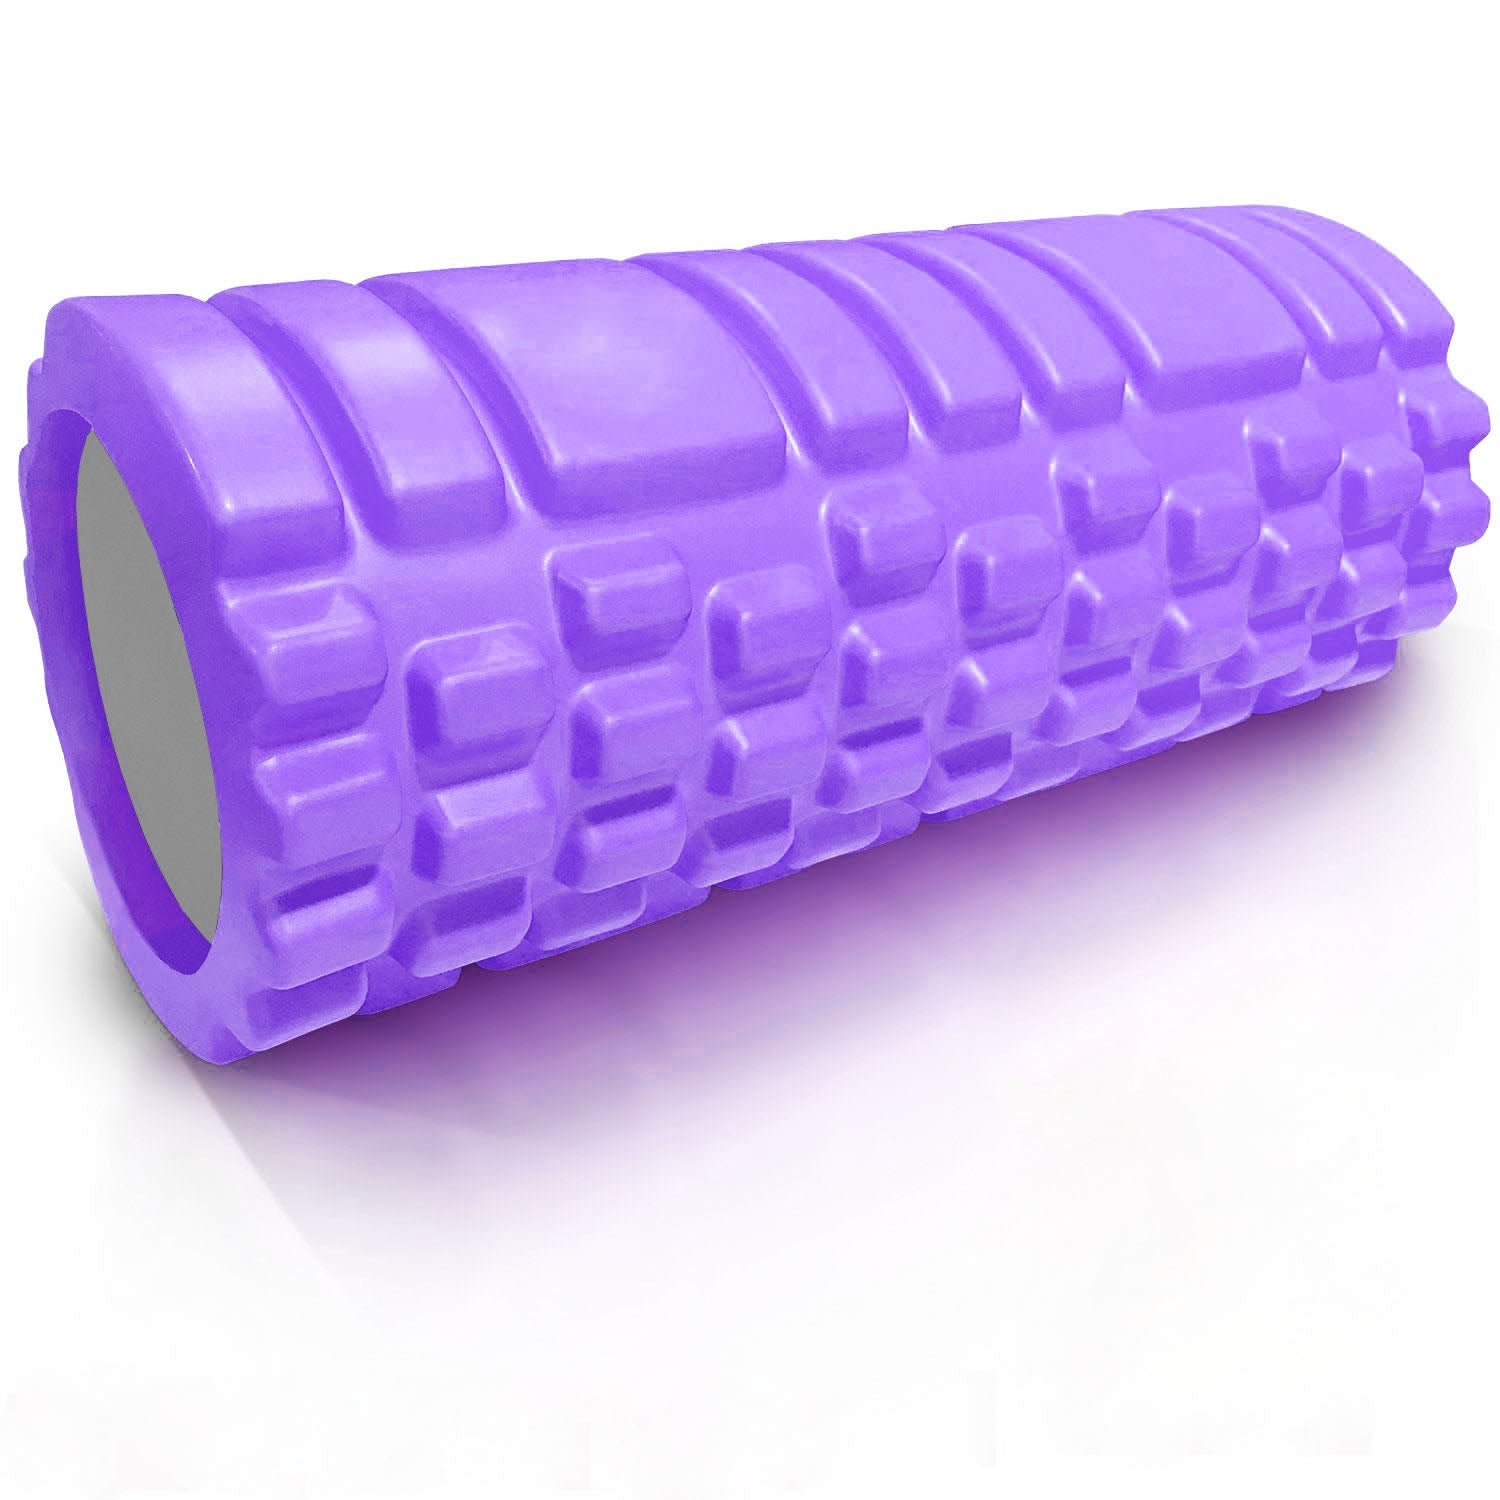 Body Roller บอดี้โรเลอร์ - Medium Density Foam รุ่นความหนาแน่นระดับกลาง